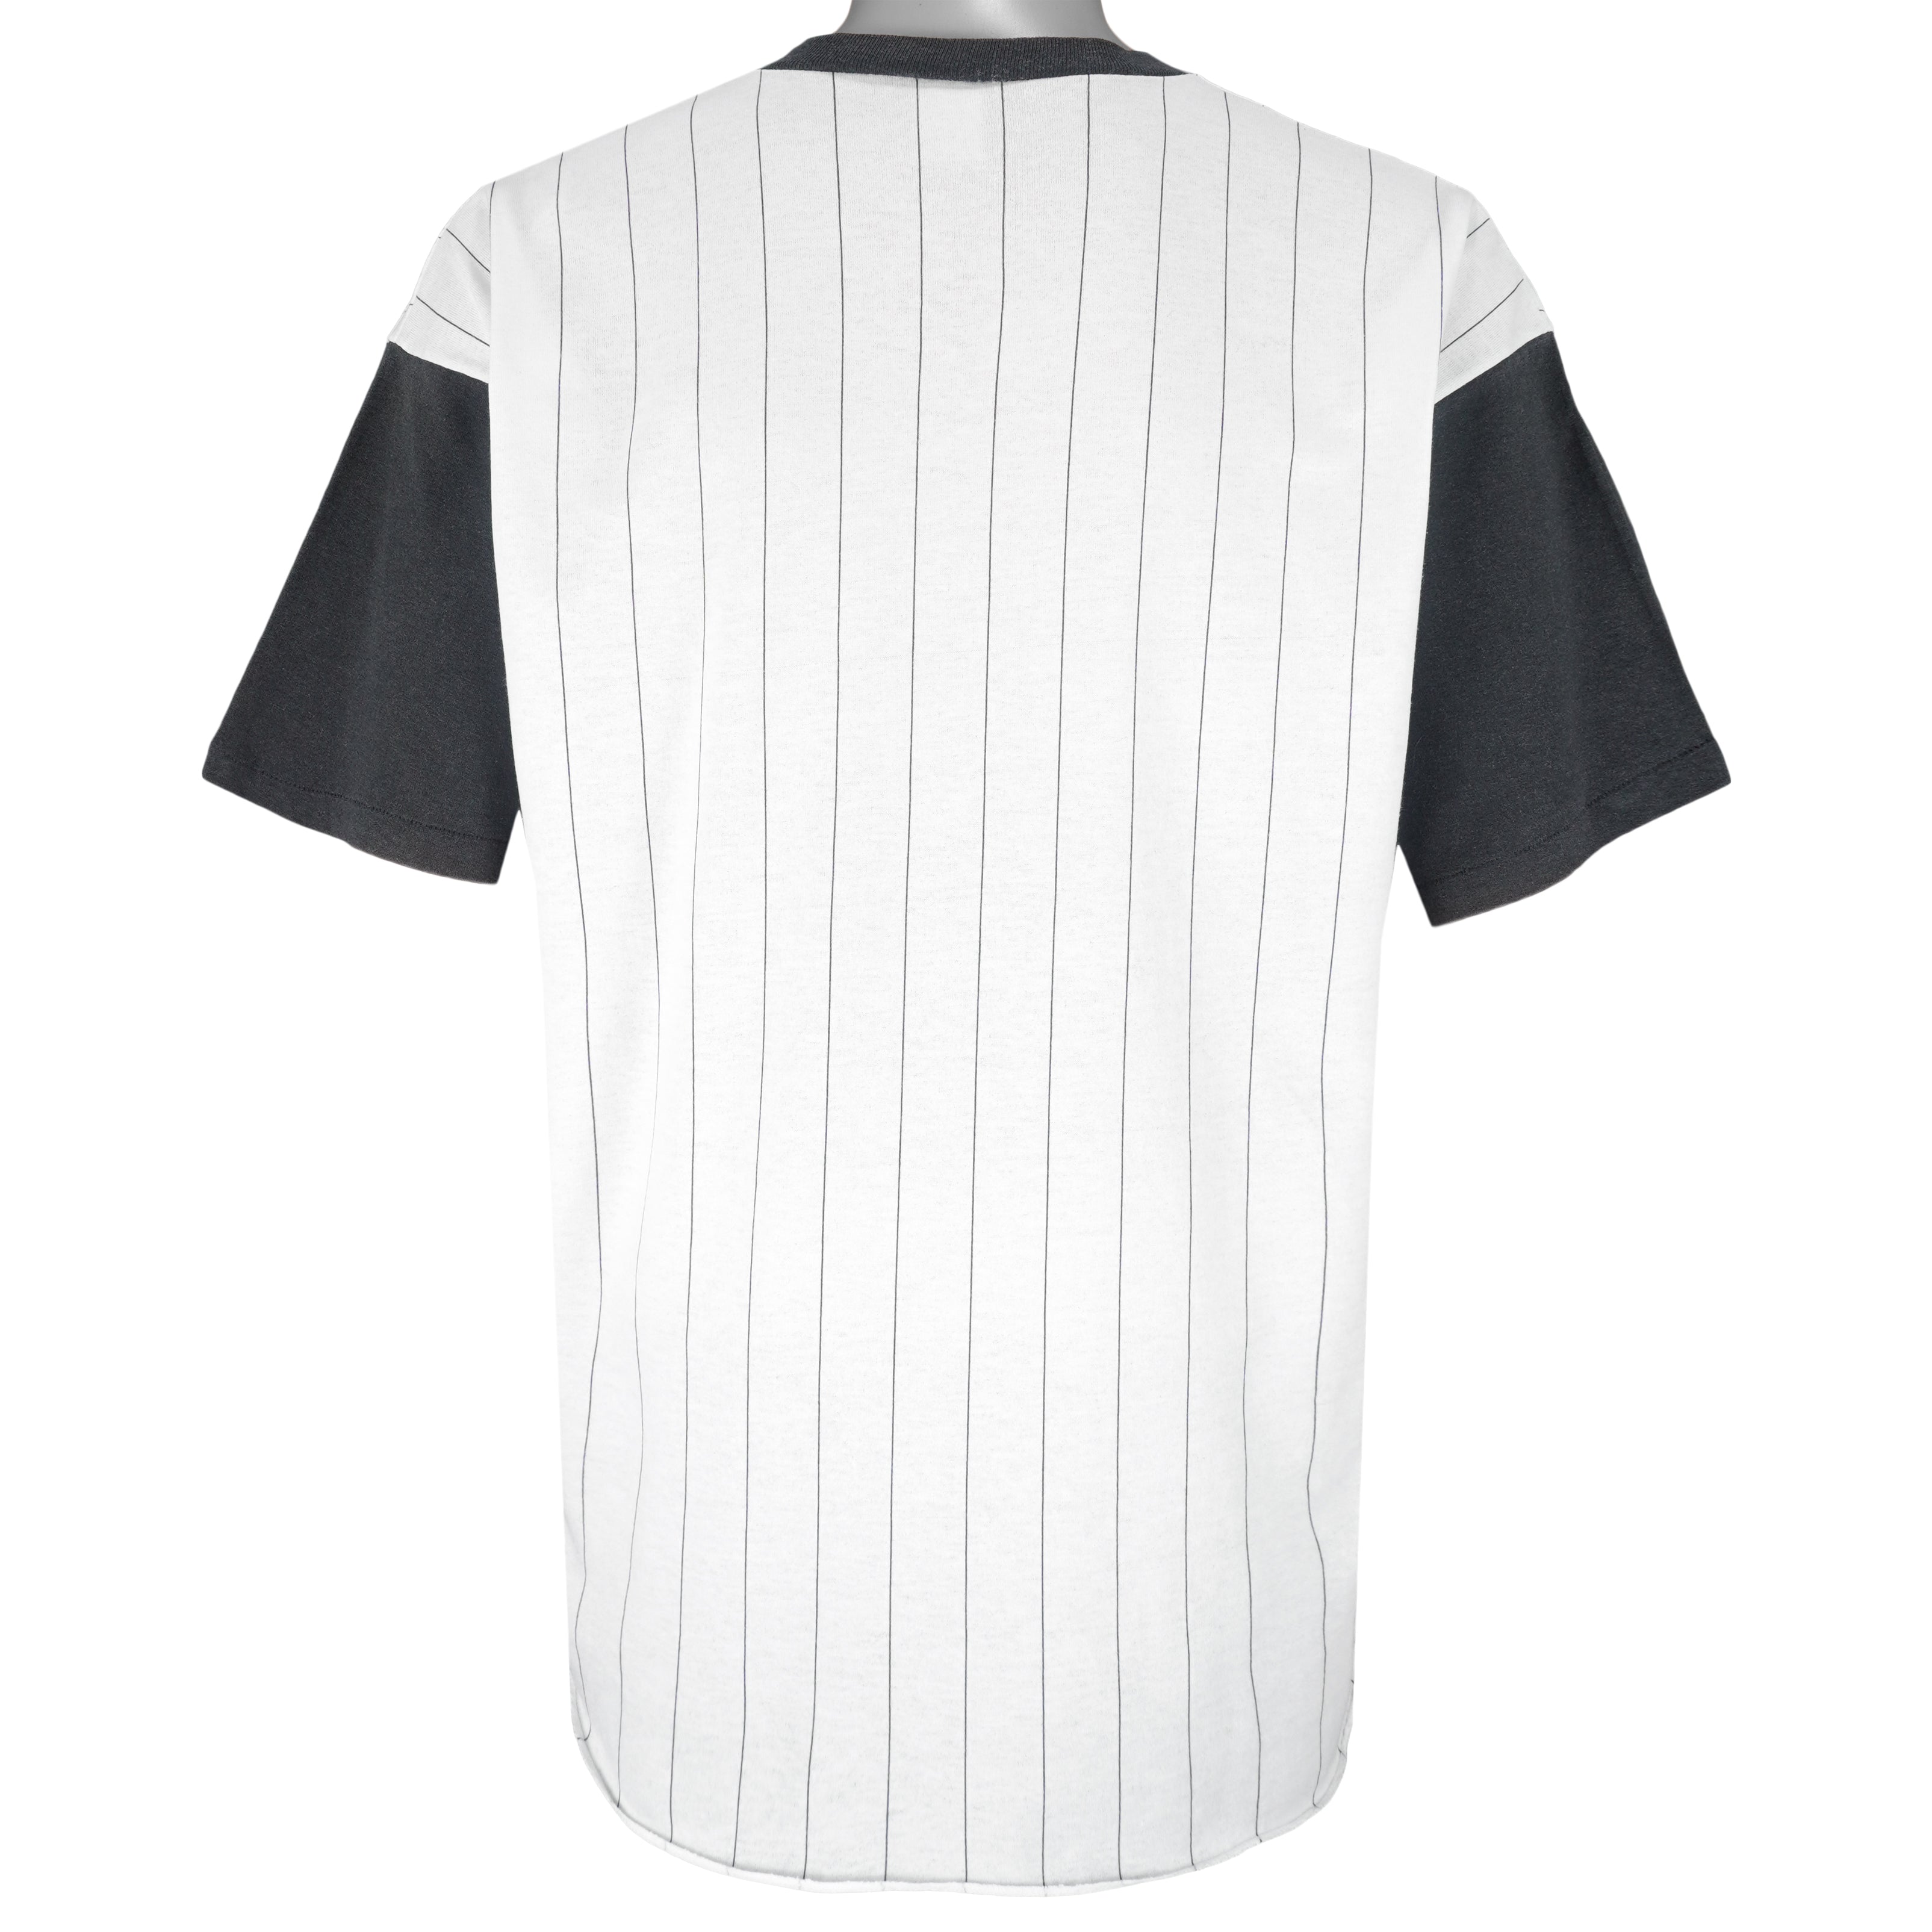 Vintage Starter MLB Baltimore Orioles Baseball Jersey XL Black Gray Sewn